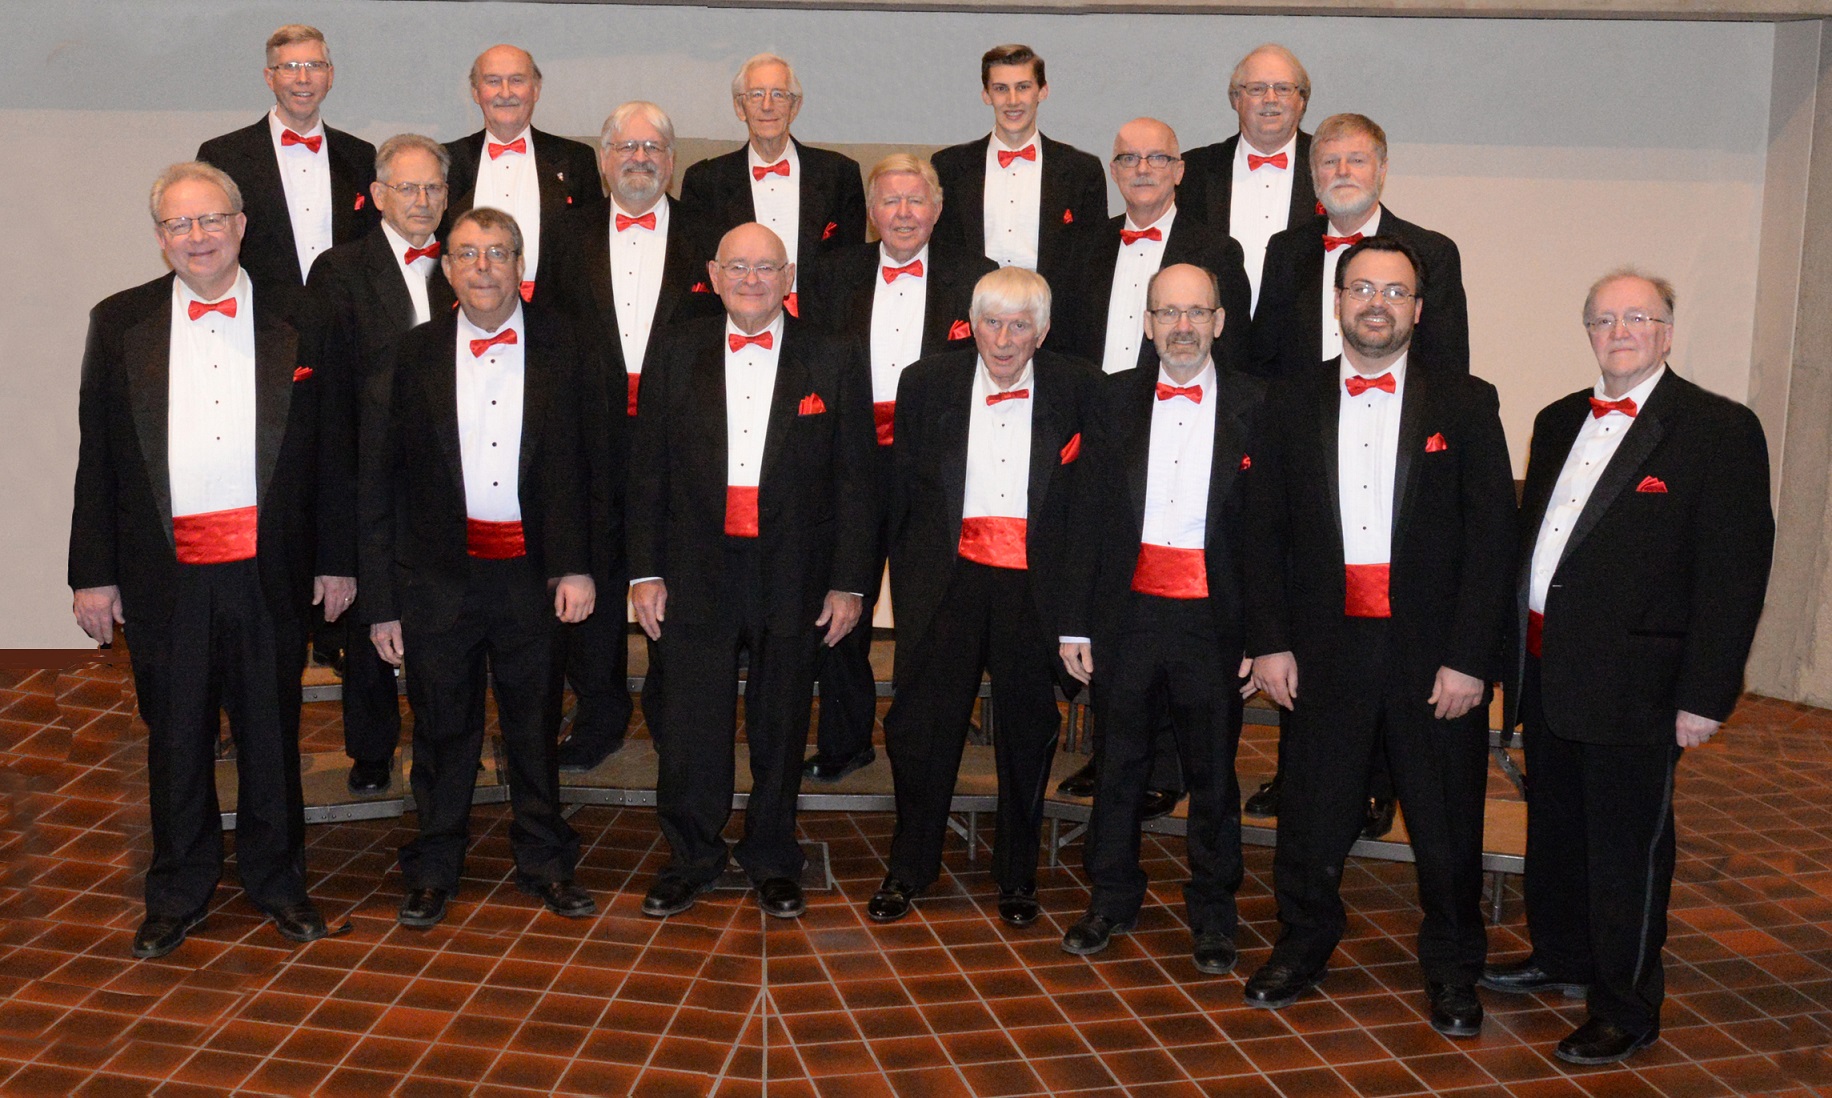 Rochester Male Chorus 2020 Christmas Concert